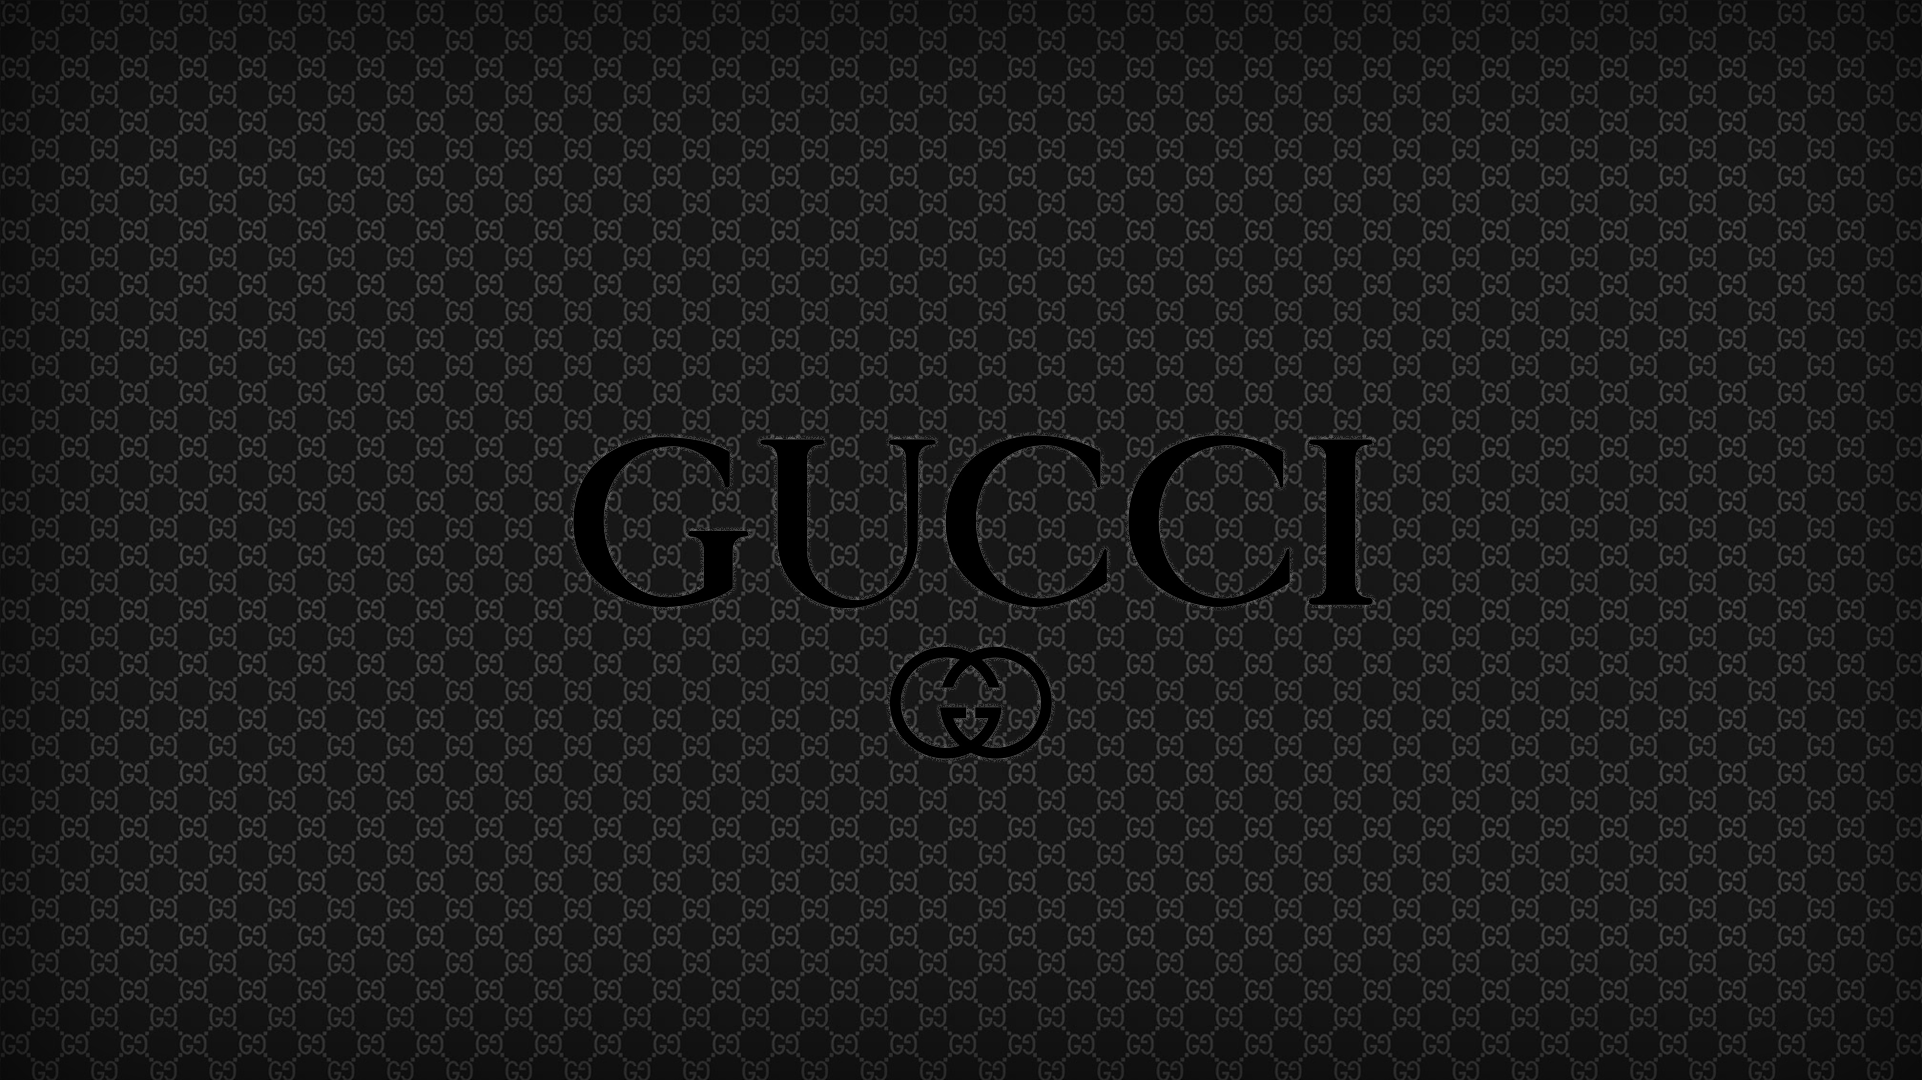 Gucci Logo Wallpaper HD